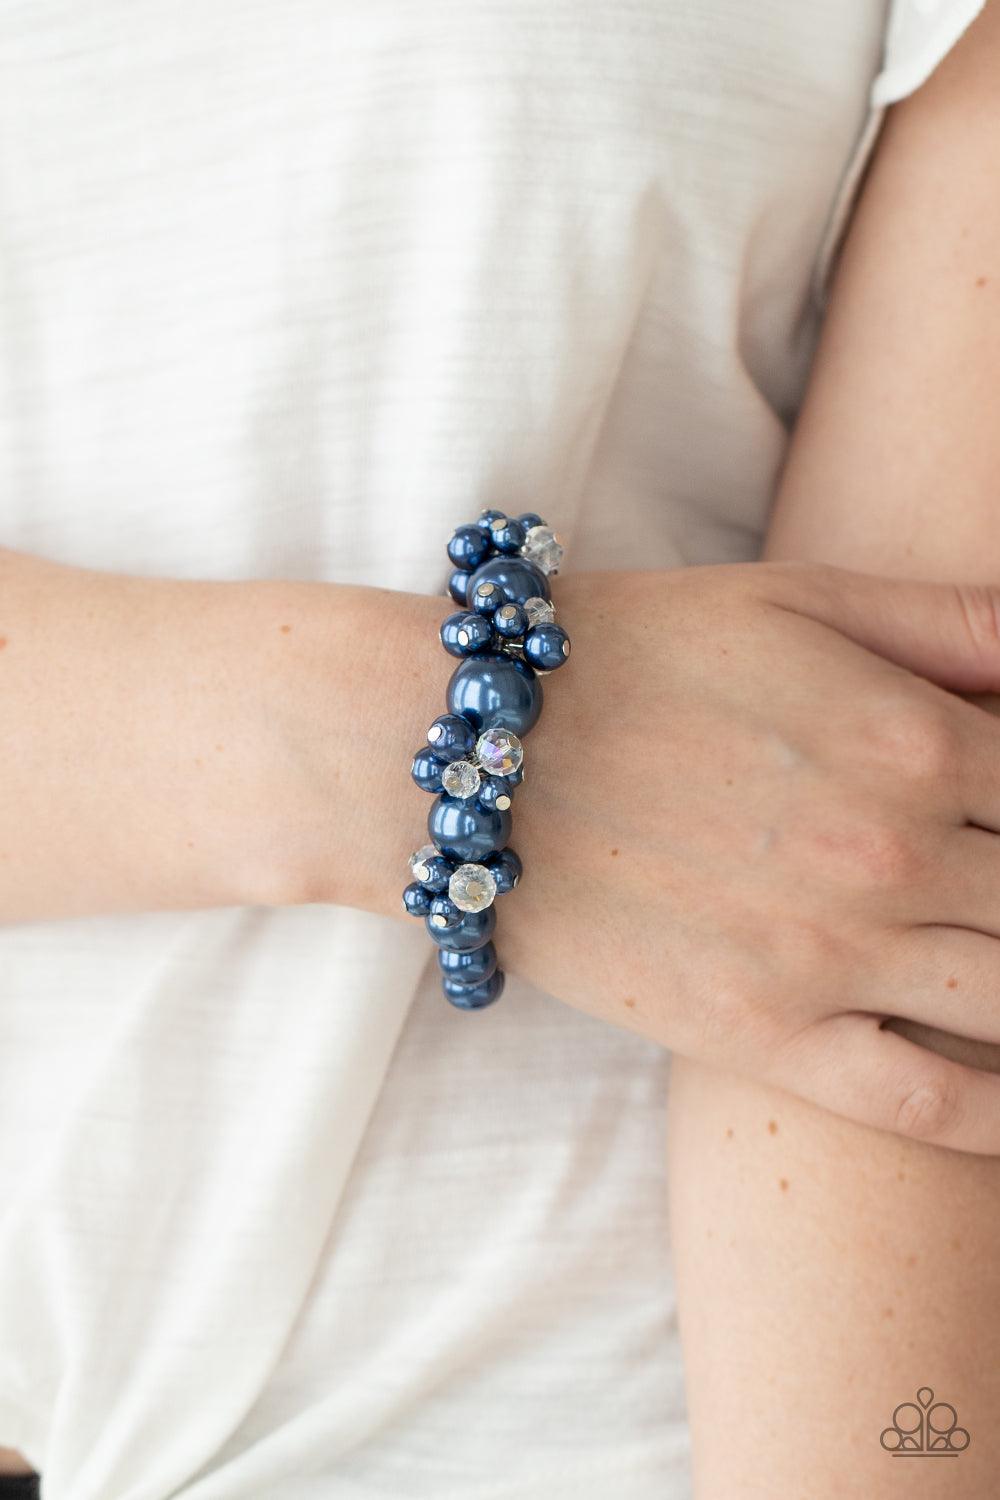 Upcycled Upscale Blue Bracelet - Jewelry by Bretta